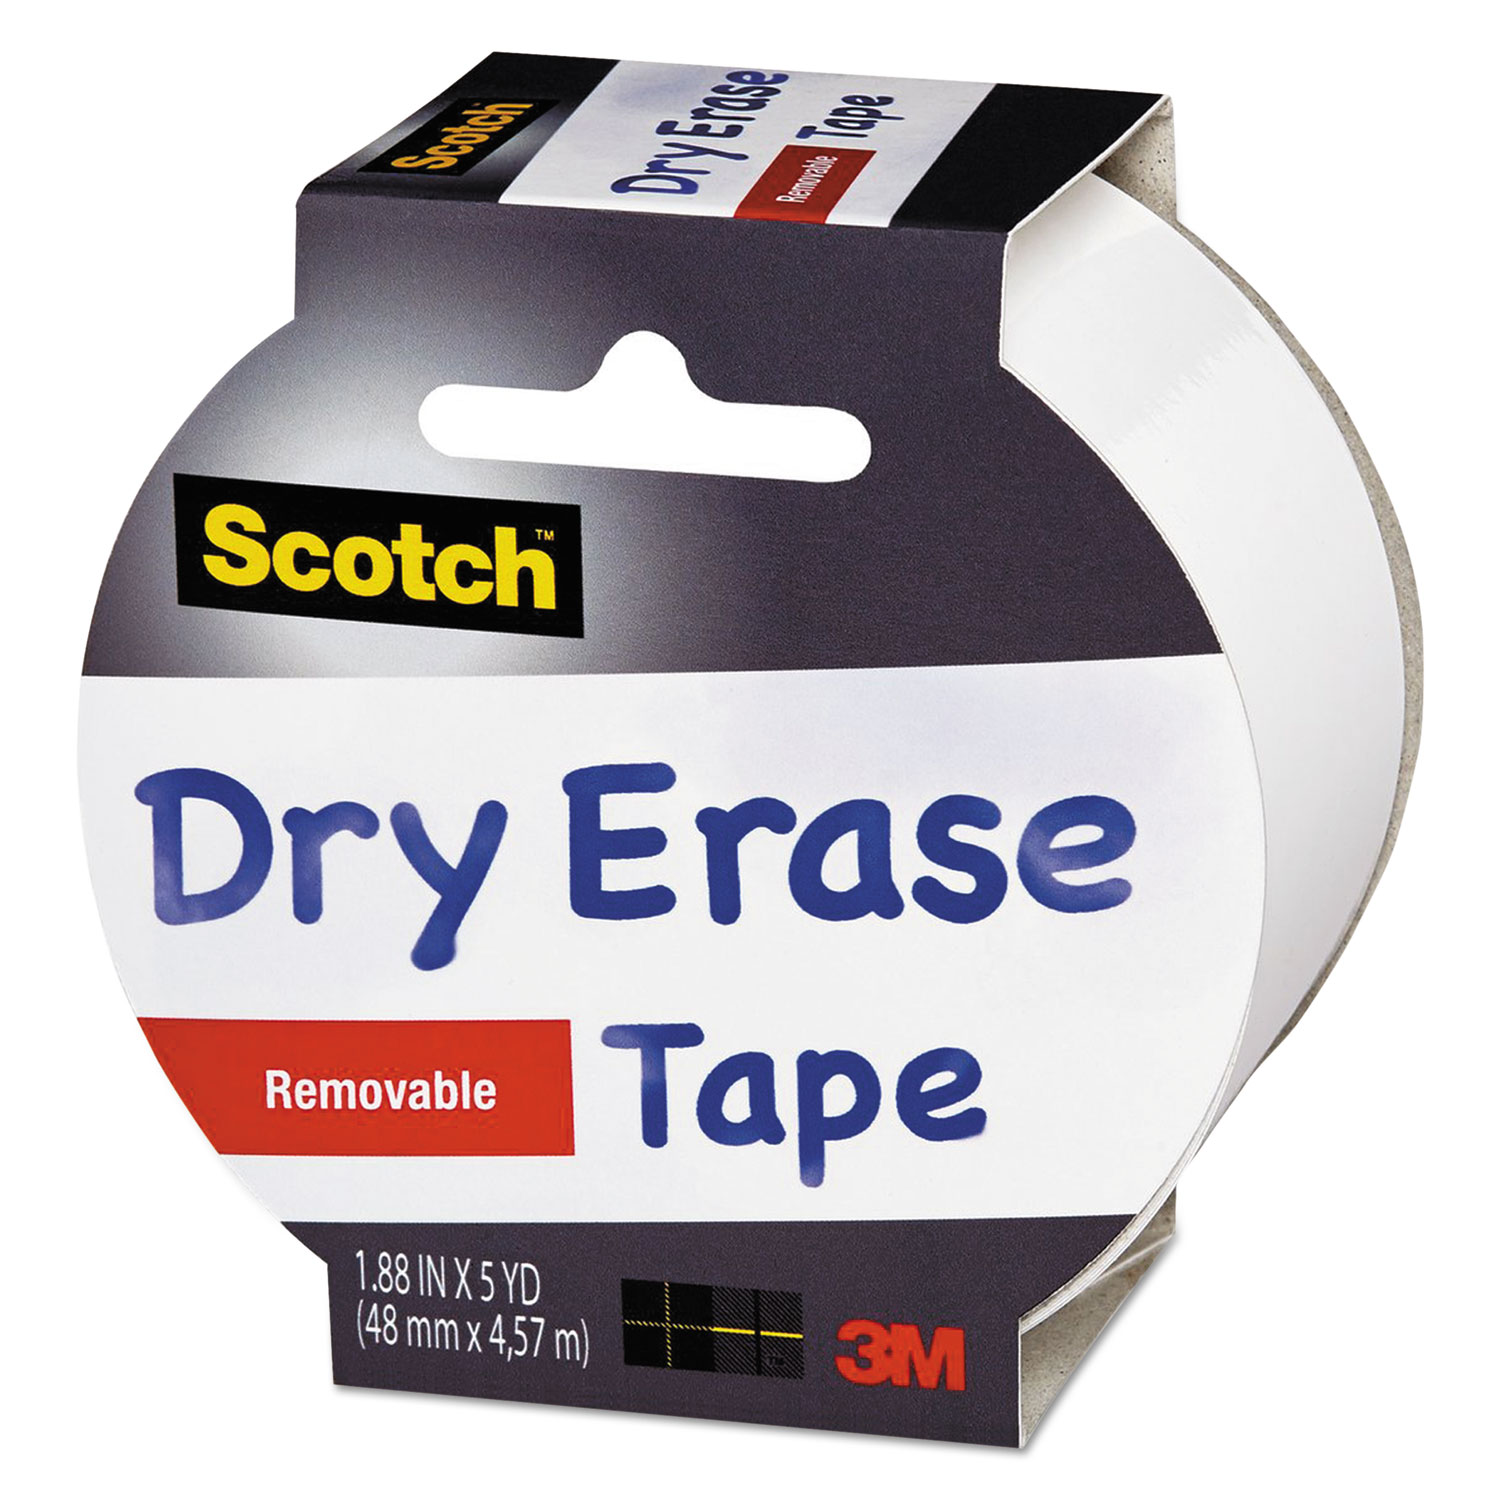 Dry Erase Tape, 1.88 x 5yds, 3 Core, White